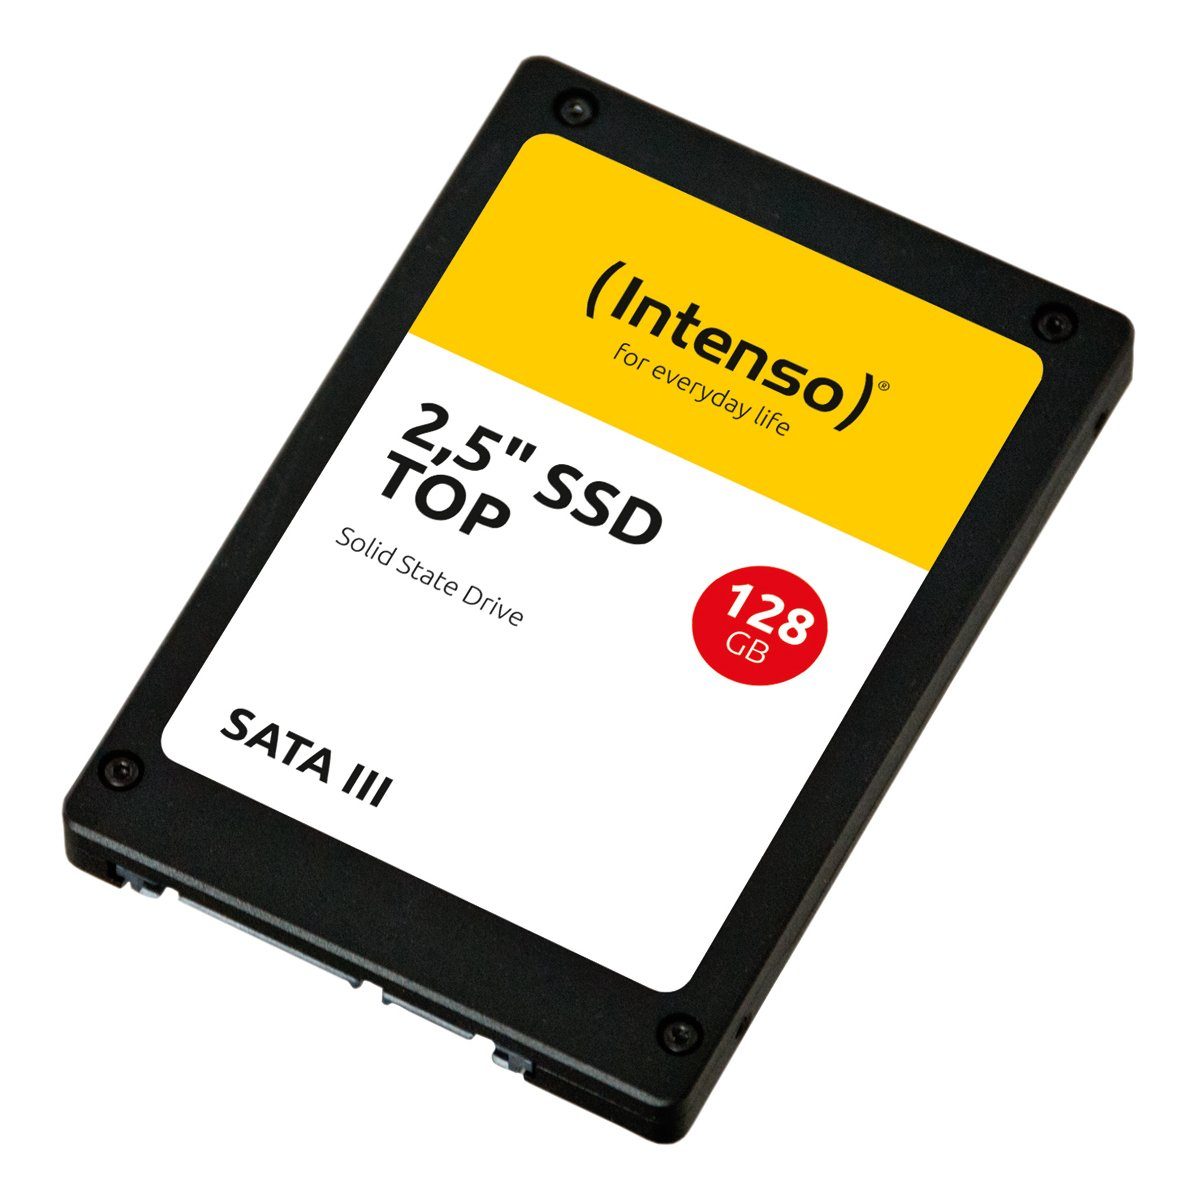 Intenso SSD-Festplatte 128GB SSD SATA3 Intenso Top